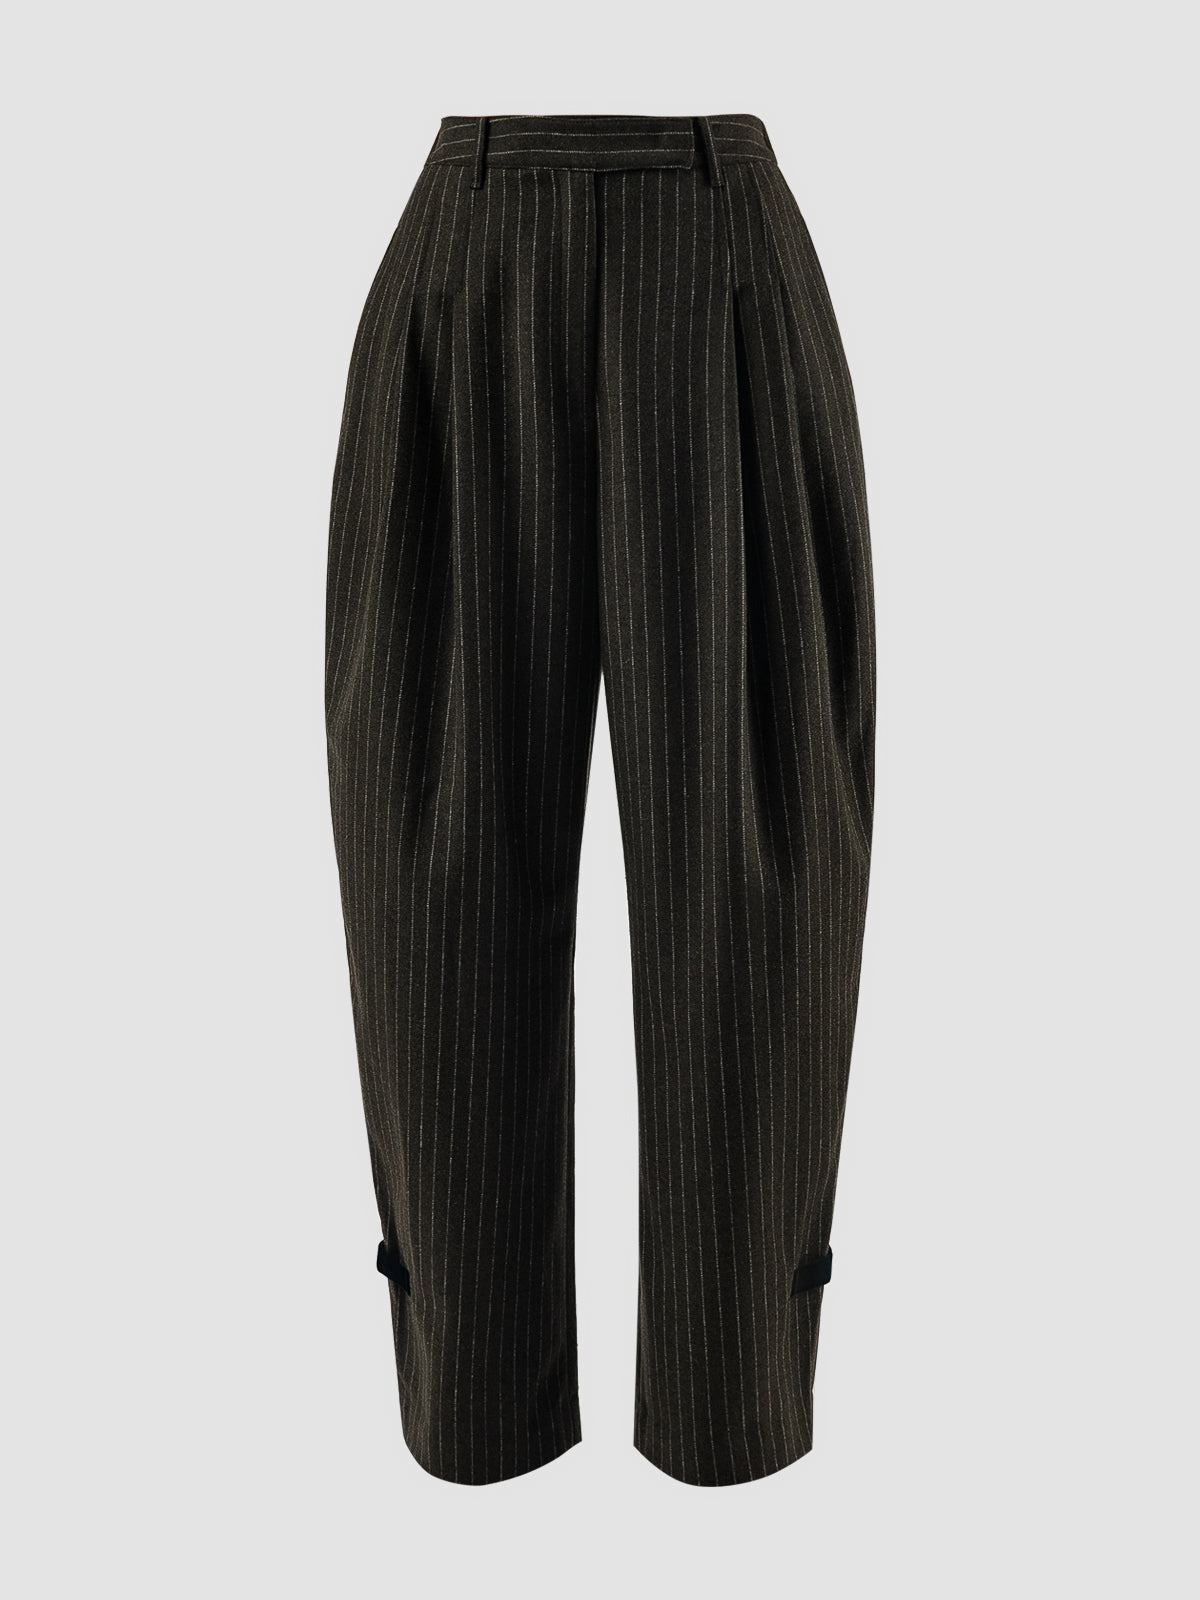 Brown Plaid Suspender Wool Pants Women, Autumn Winter Straight-leg Pants,  High Waist Pants, Long Suspender Pants, Custom Made Pants 3964 -  Canada